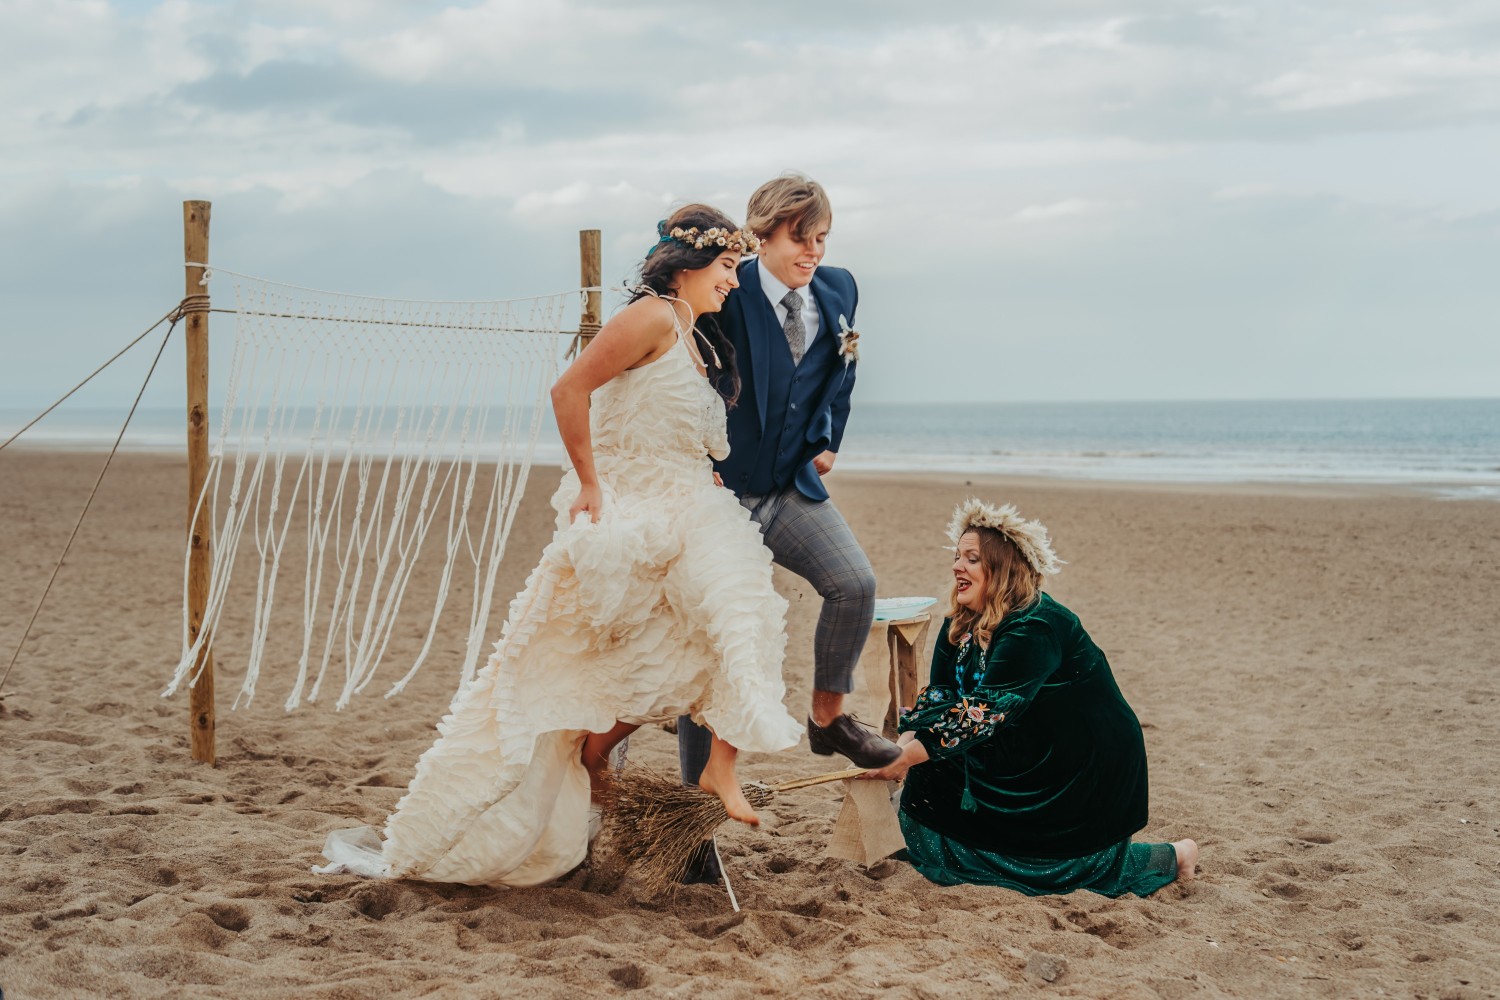 beach elopement - beach wedding - eco friendly wedding -tempest themed wedding - jumping the broom wedding ceremony